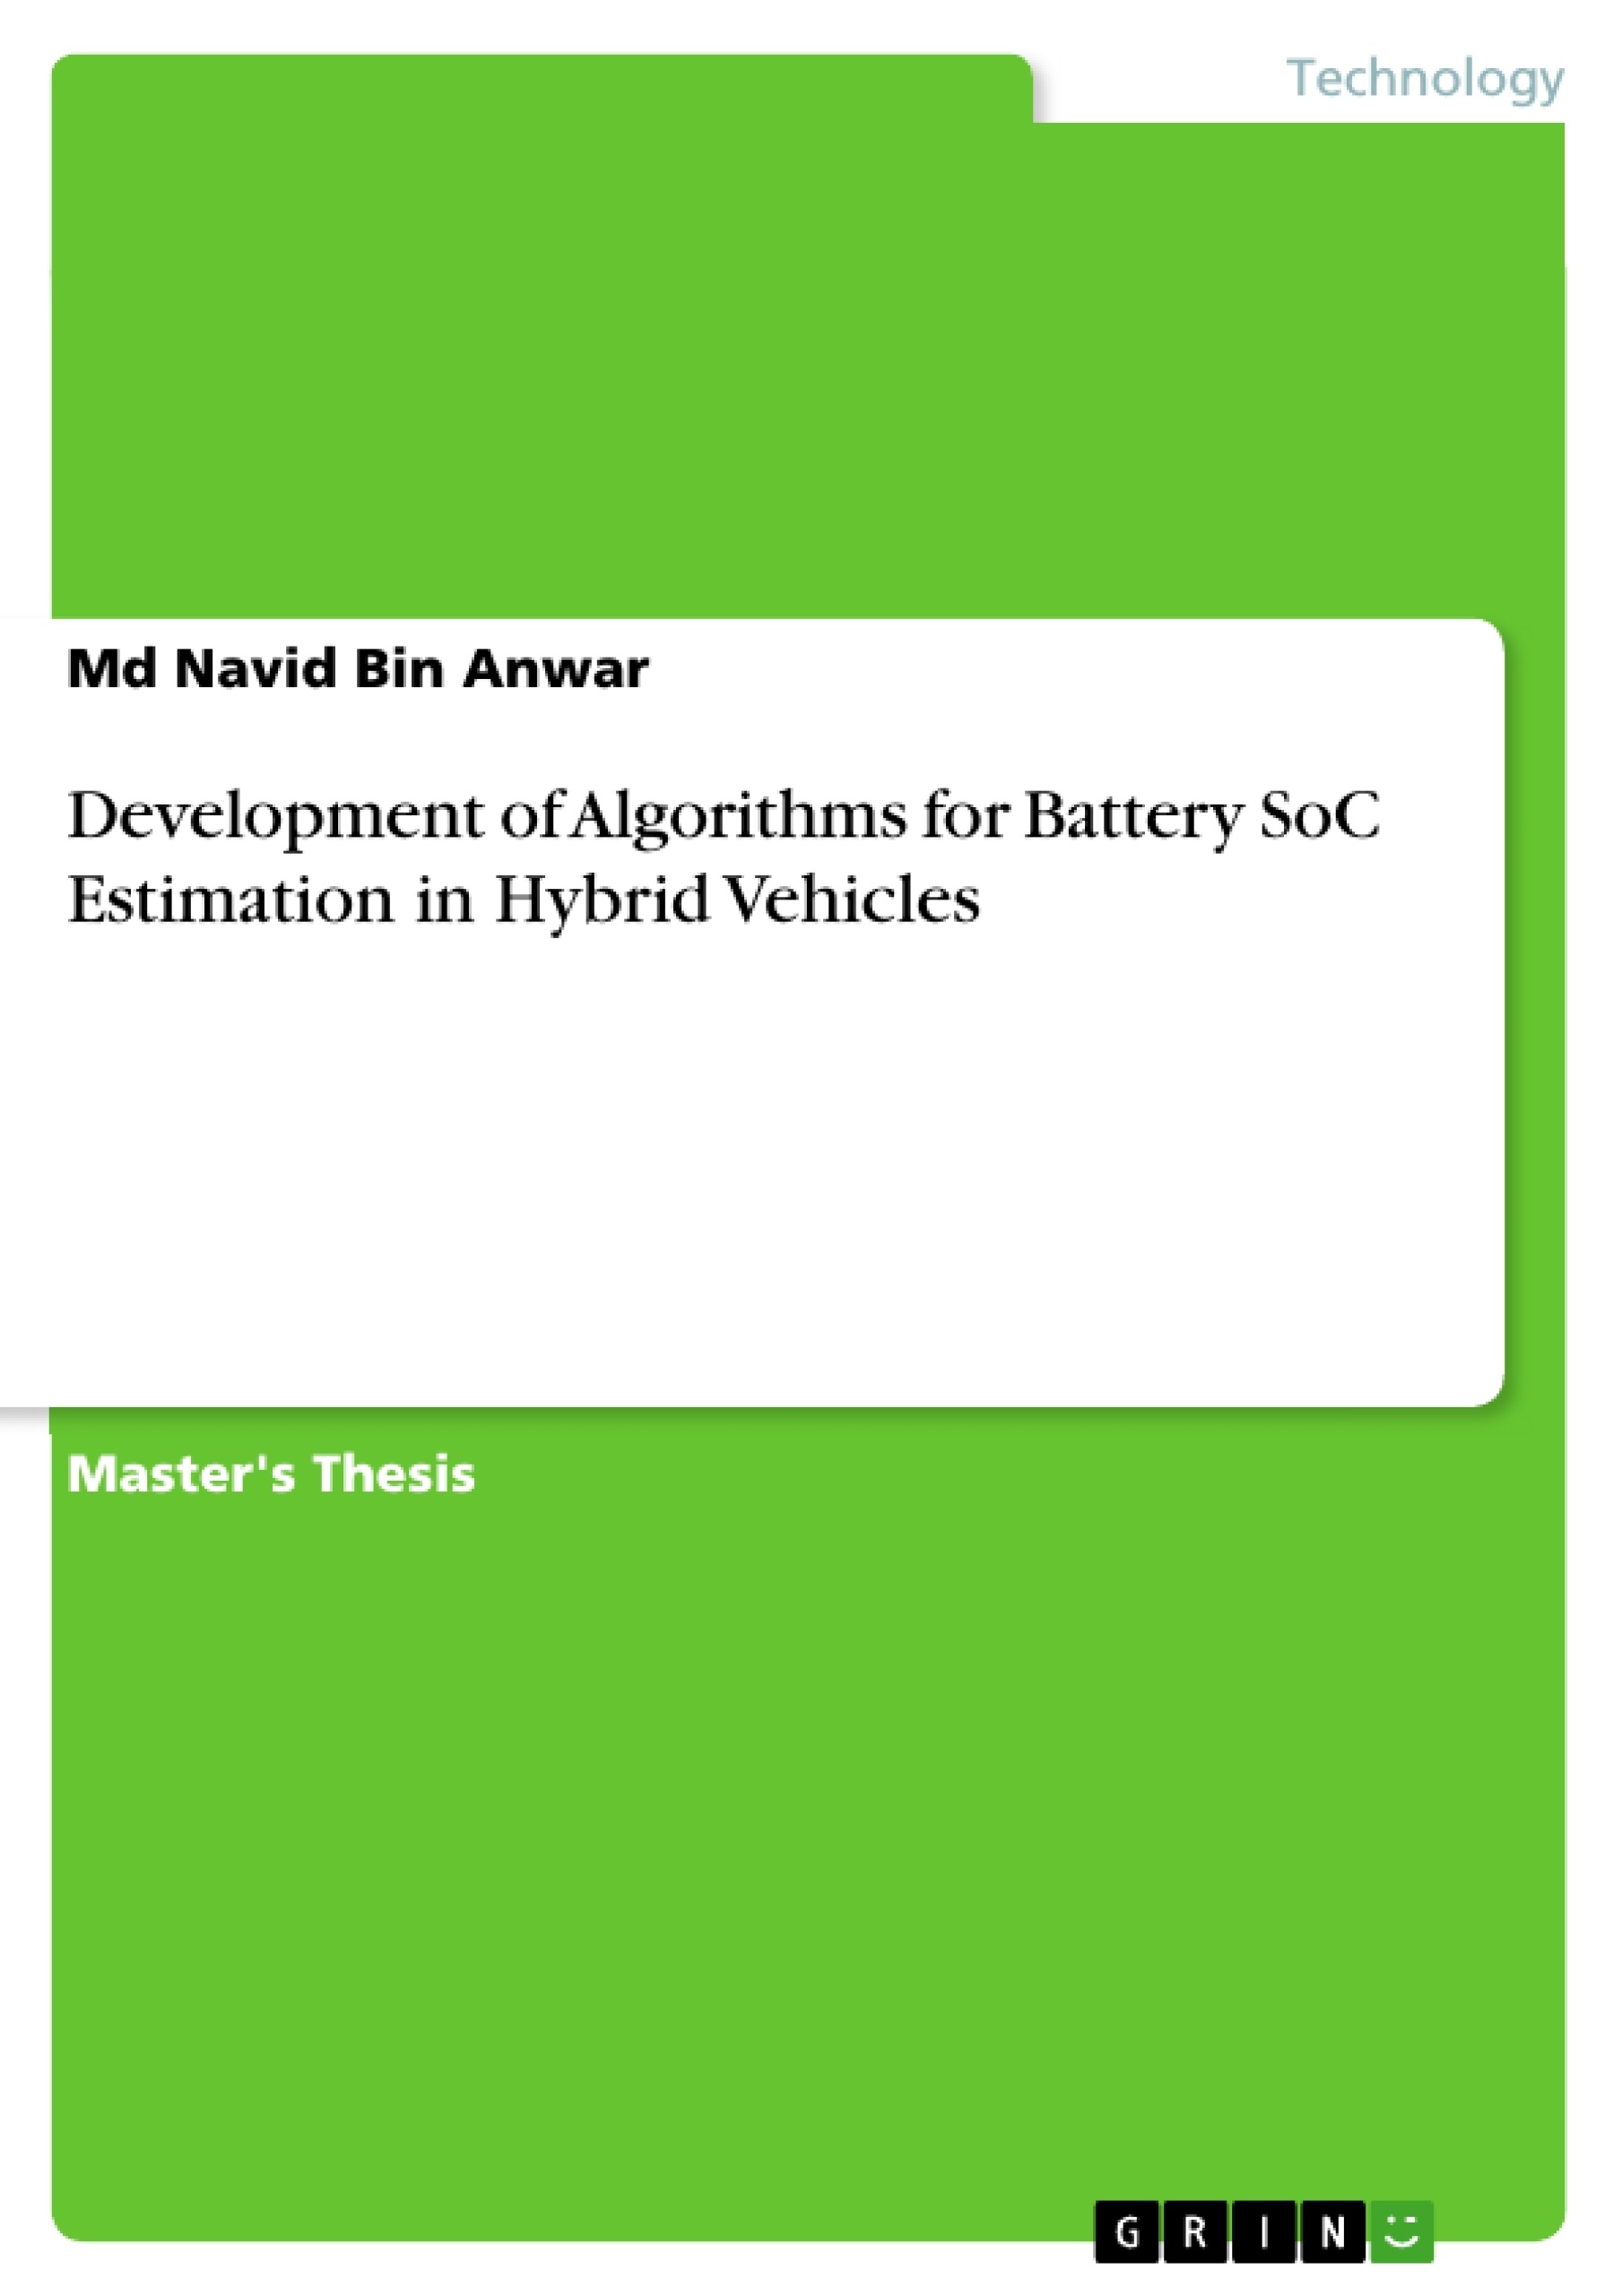 Title: Development of Algorithms for Battery SoC Estimation in Hybrid Vehicles